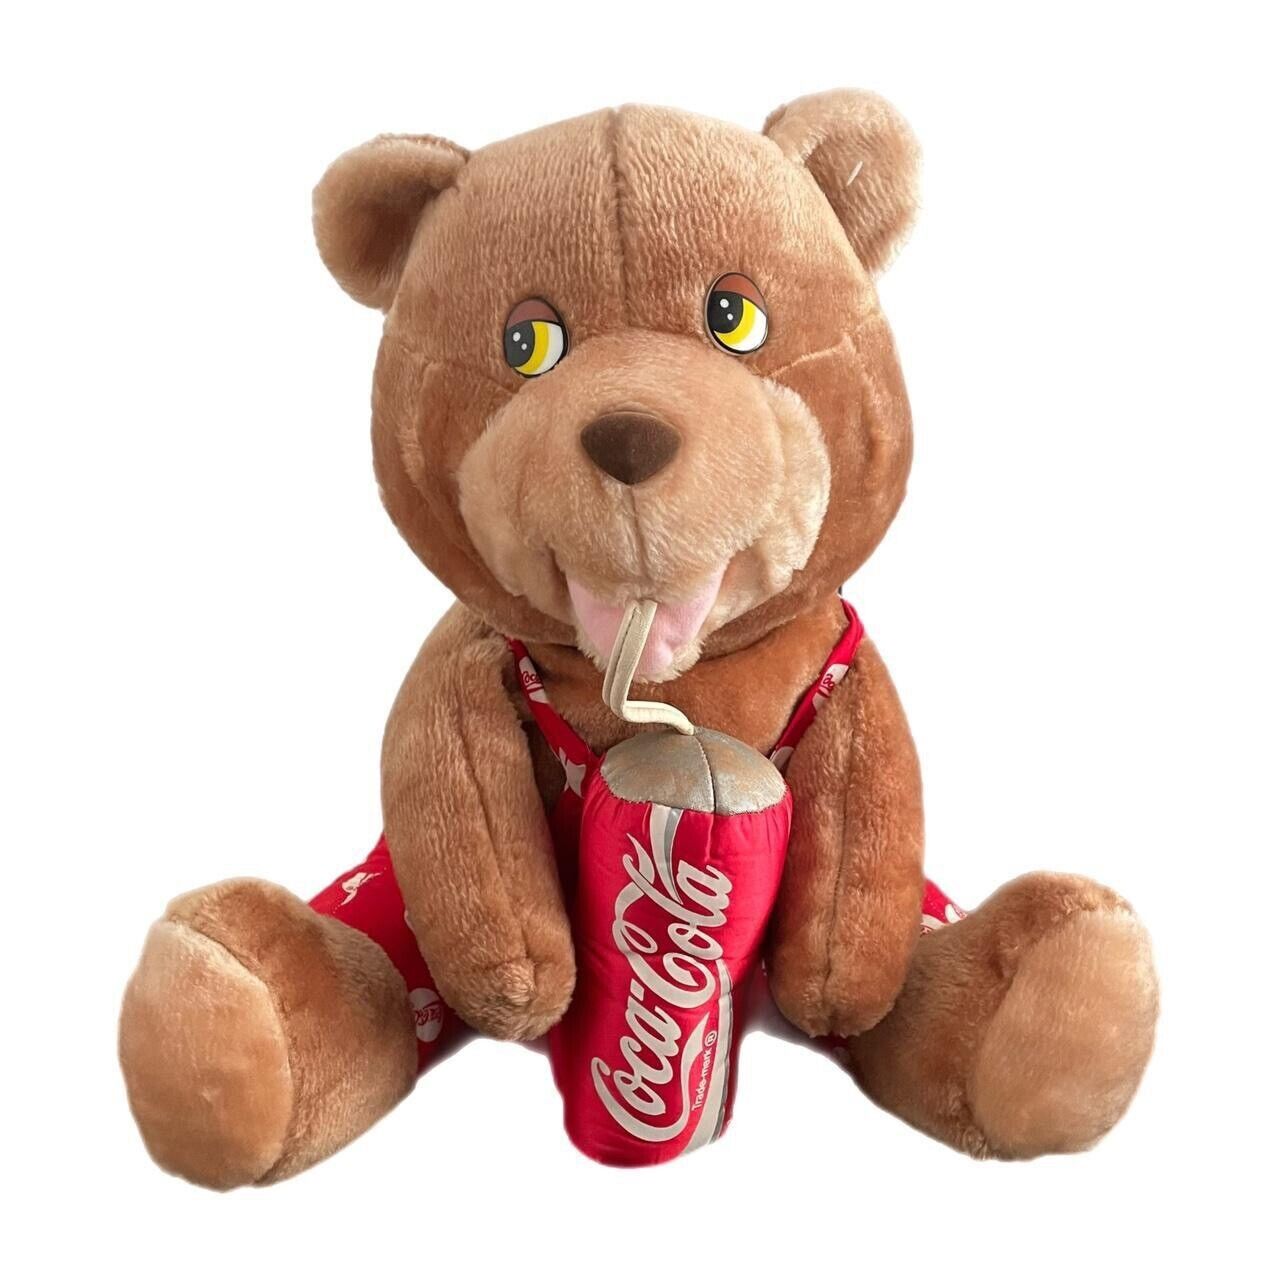 Vintage 90’s Teddy Bear Coca Cola Stuffed Animal